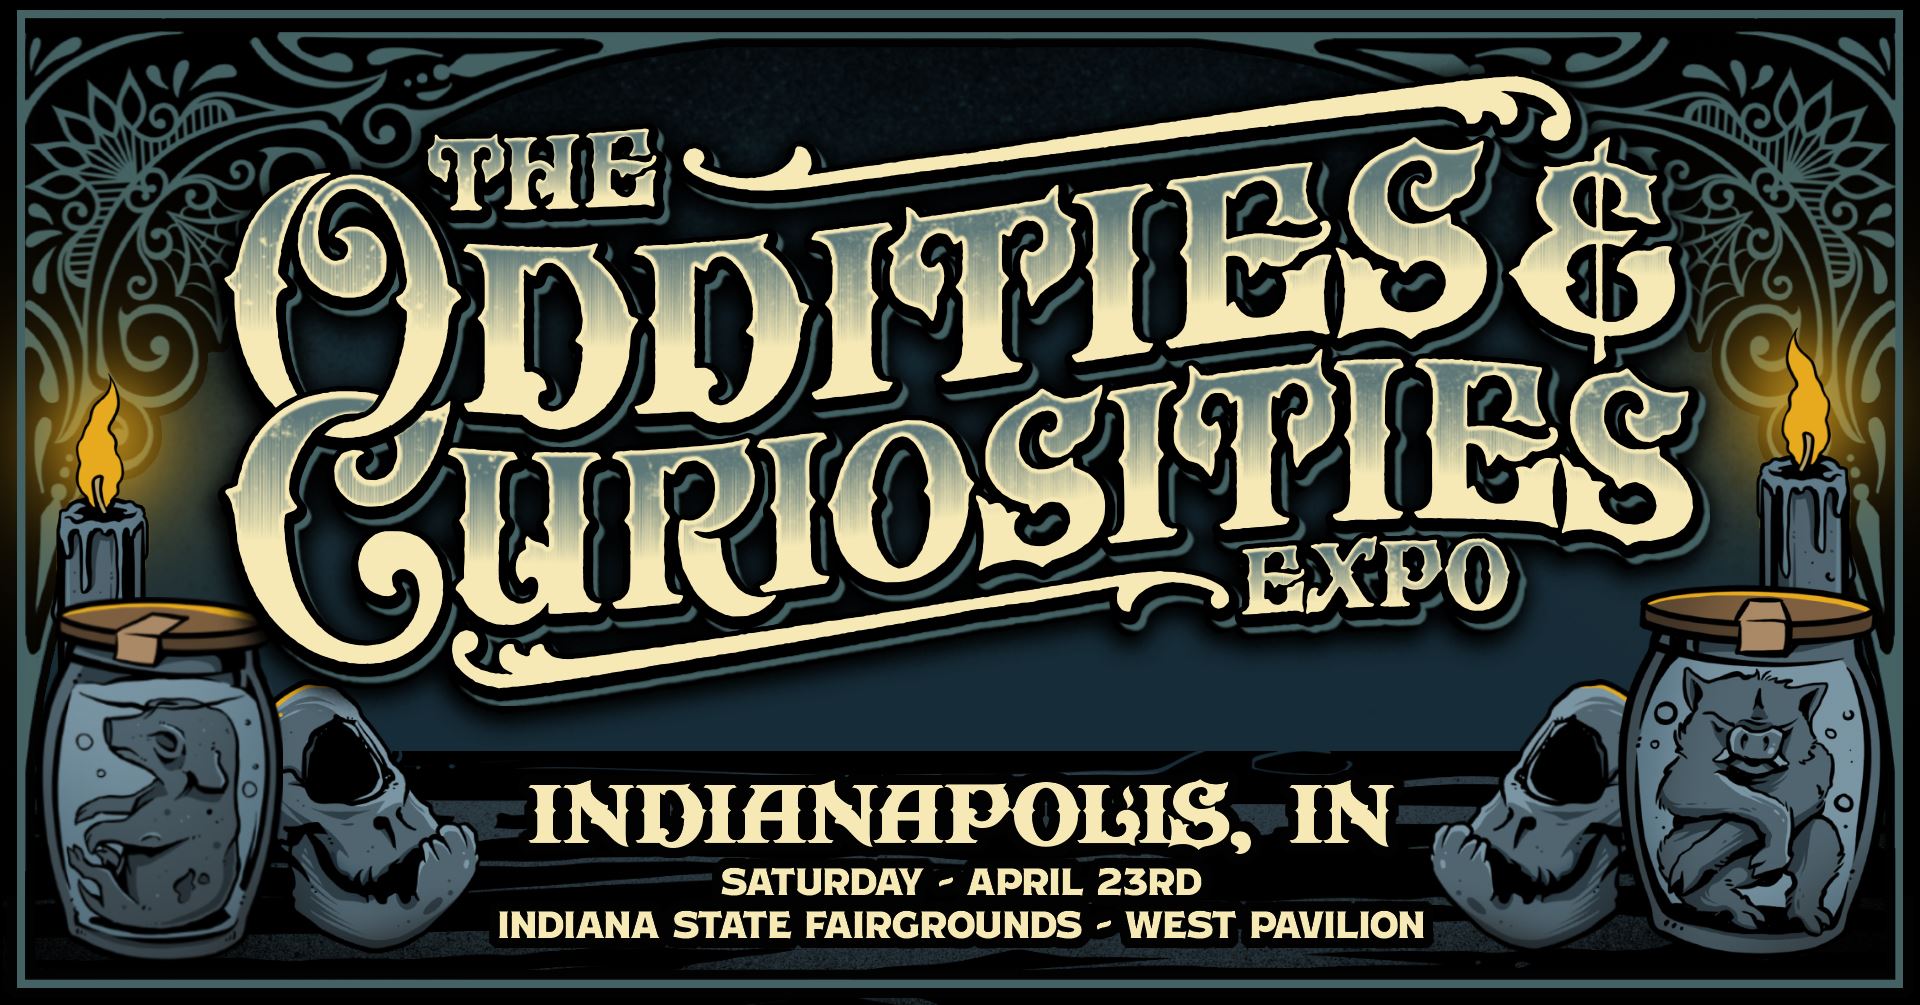 Indianapolis Oddities & Curiosities Expo 2022 ElectraRelics